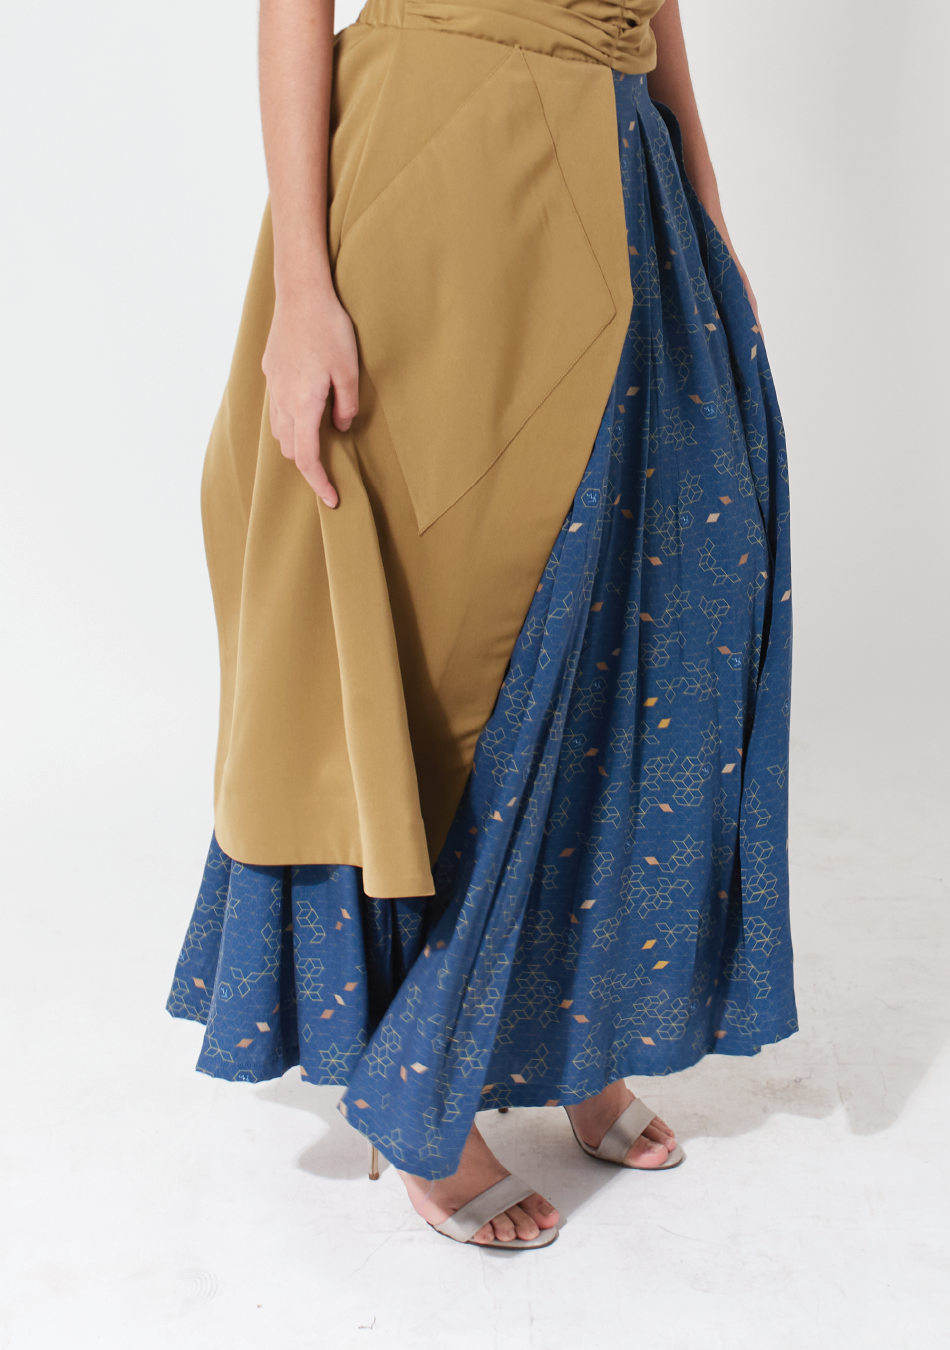 Garnet. Diamond Pattern Skirt - Special Printed Pattern with High Twist Gold